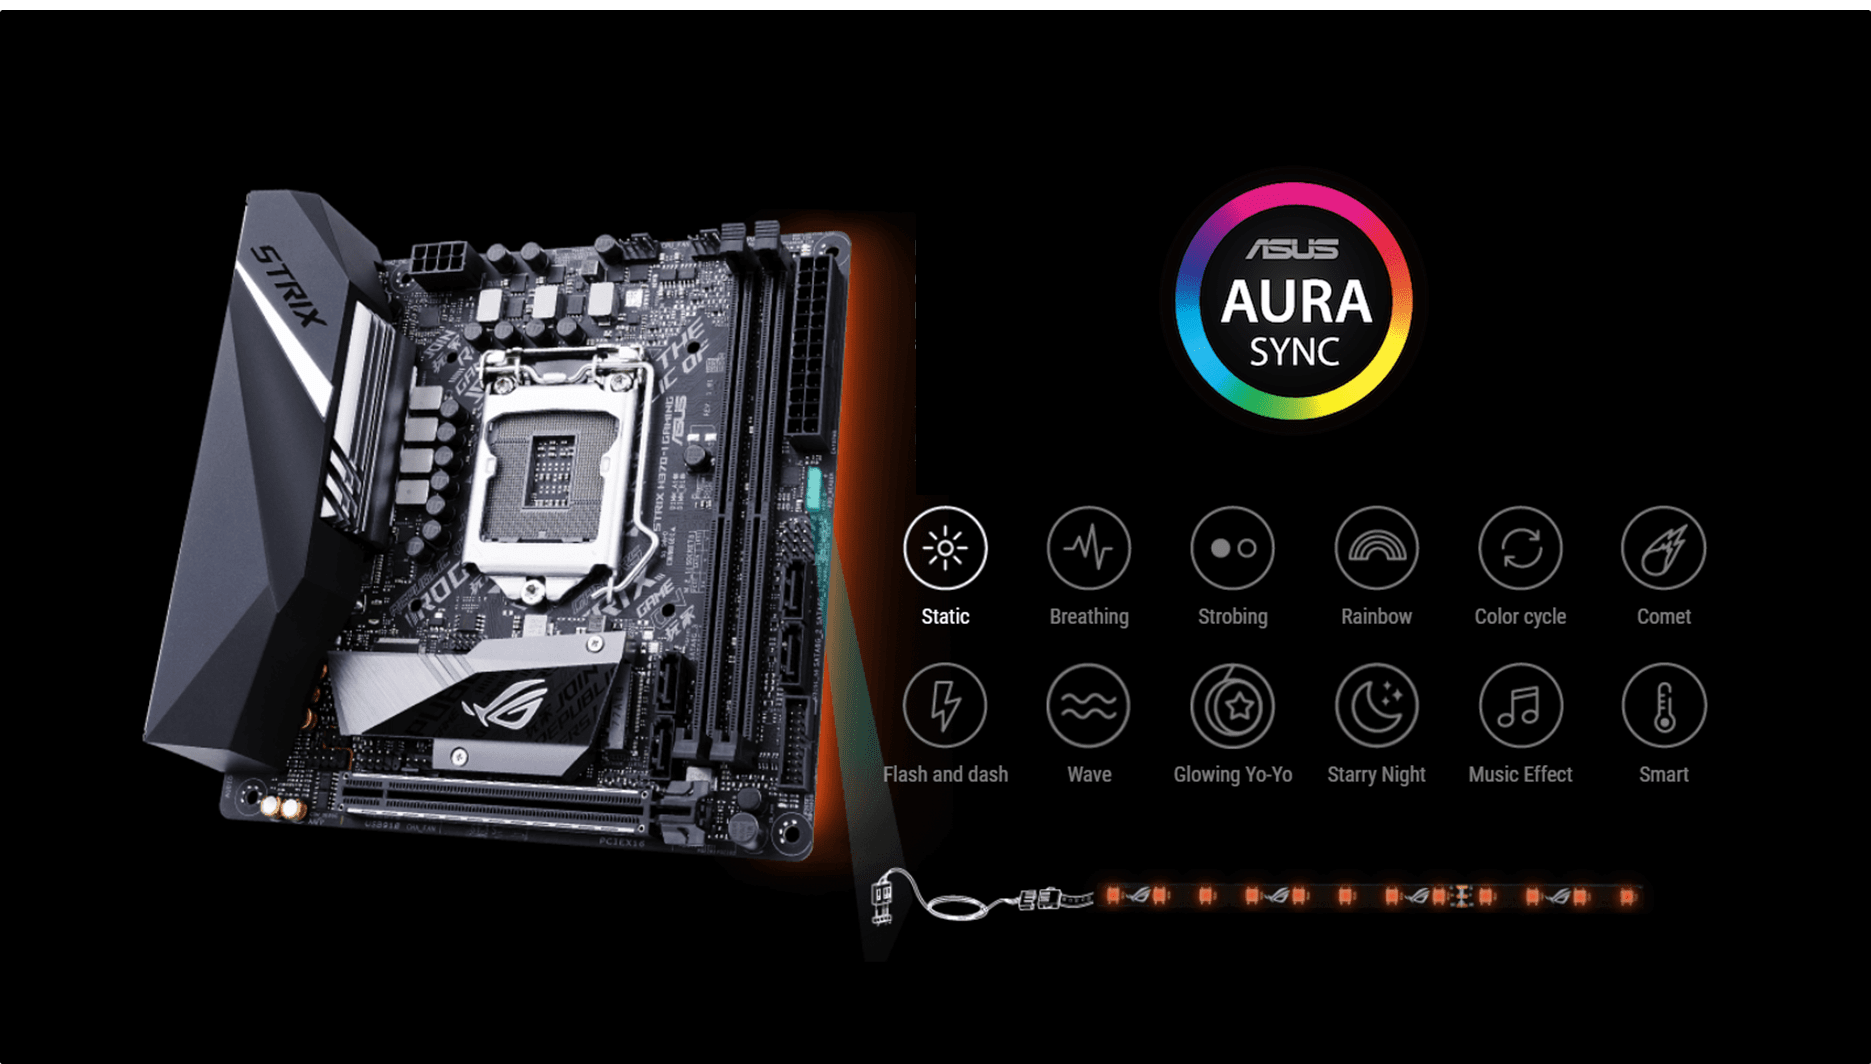 ASUS Aura RGB. ASUS Prime Aura sync. ASUS motherboard Strix Aura. ASUS ROG Strix h370-i Gaming.